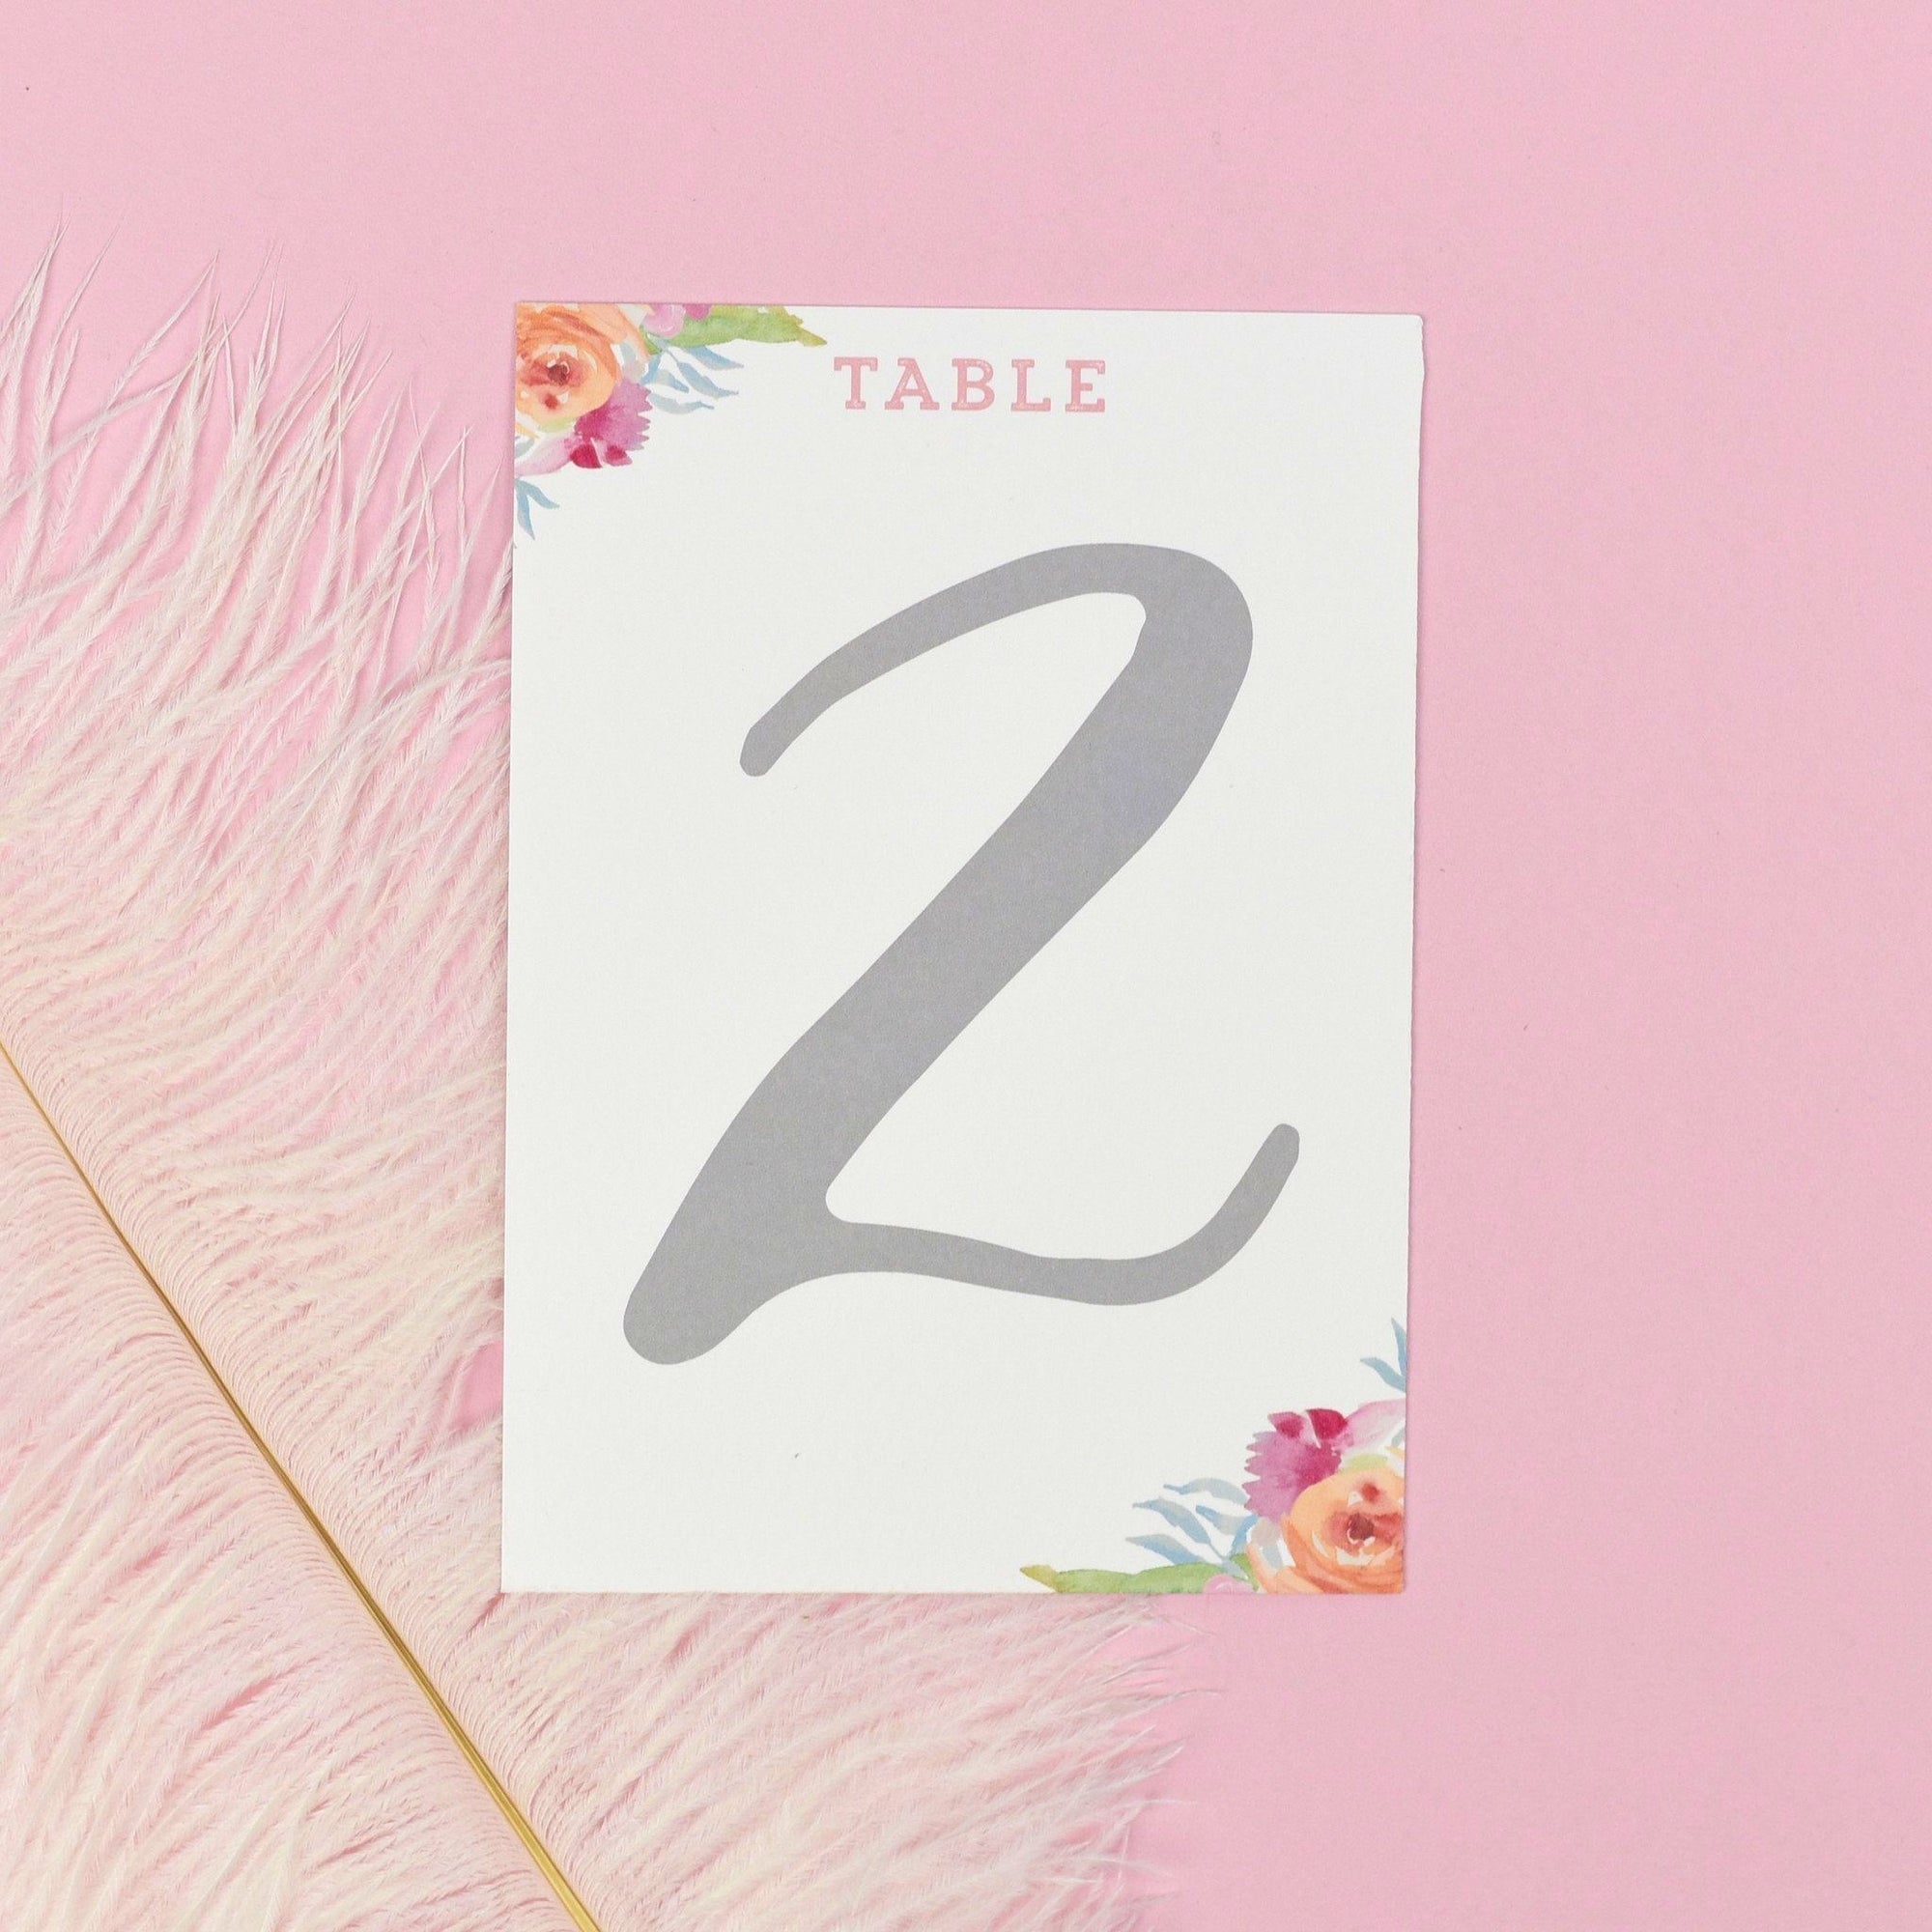 Table Names or Numbers - Bridget - Watercolour Flowers 